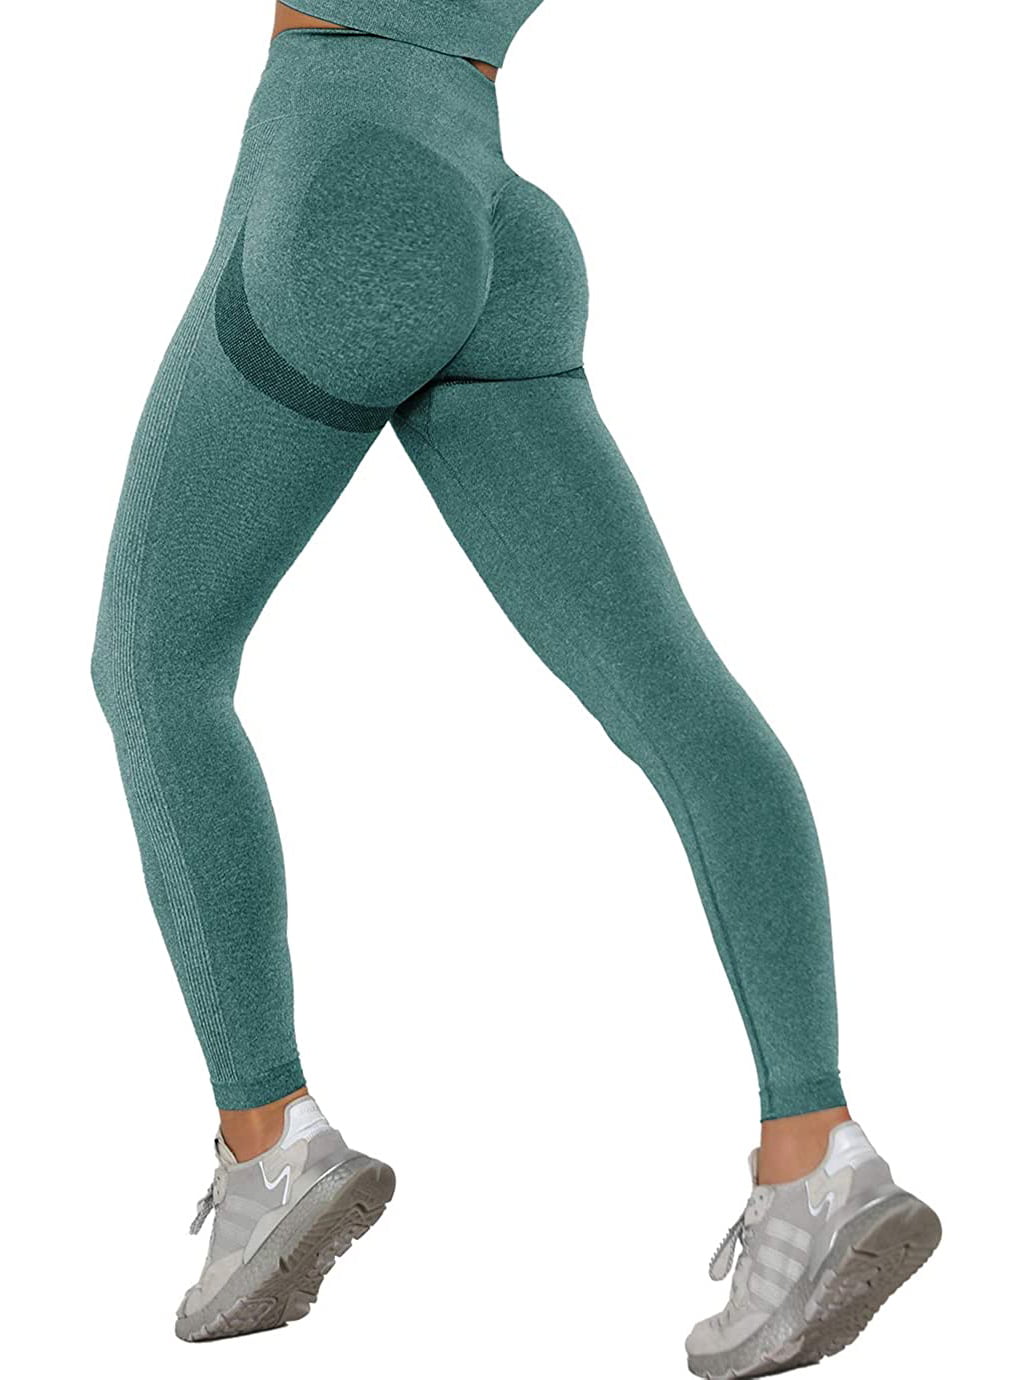 VASLANDA Seamless Leggings for Women Butt Lift High Waisted Yoga Pants  Tummy Control Compression Workout Tights Gym 